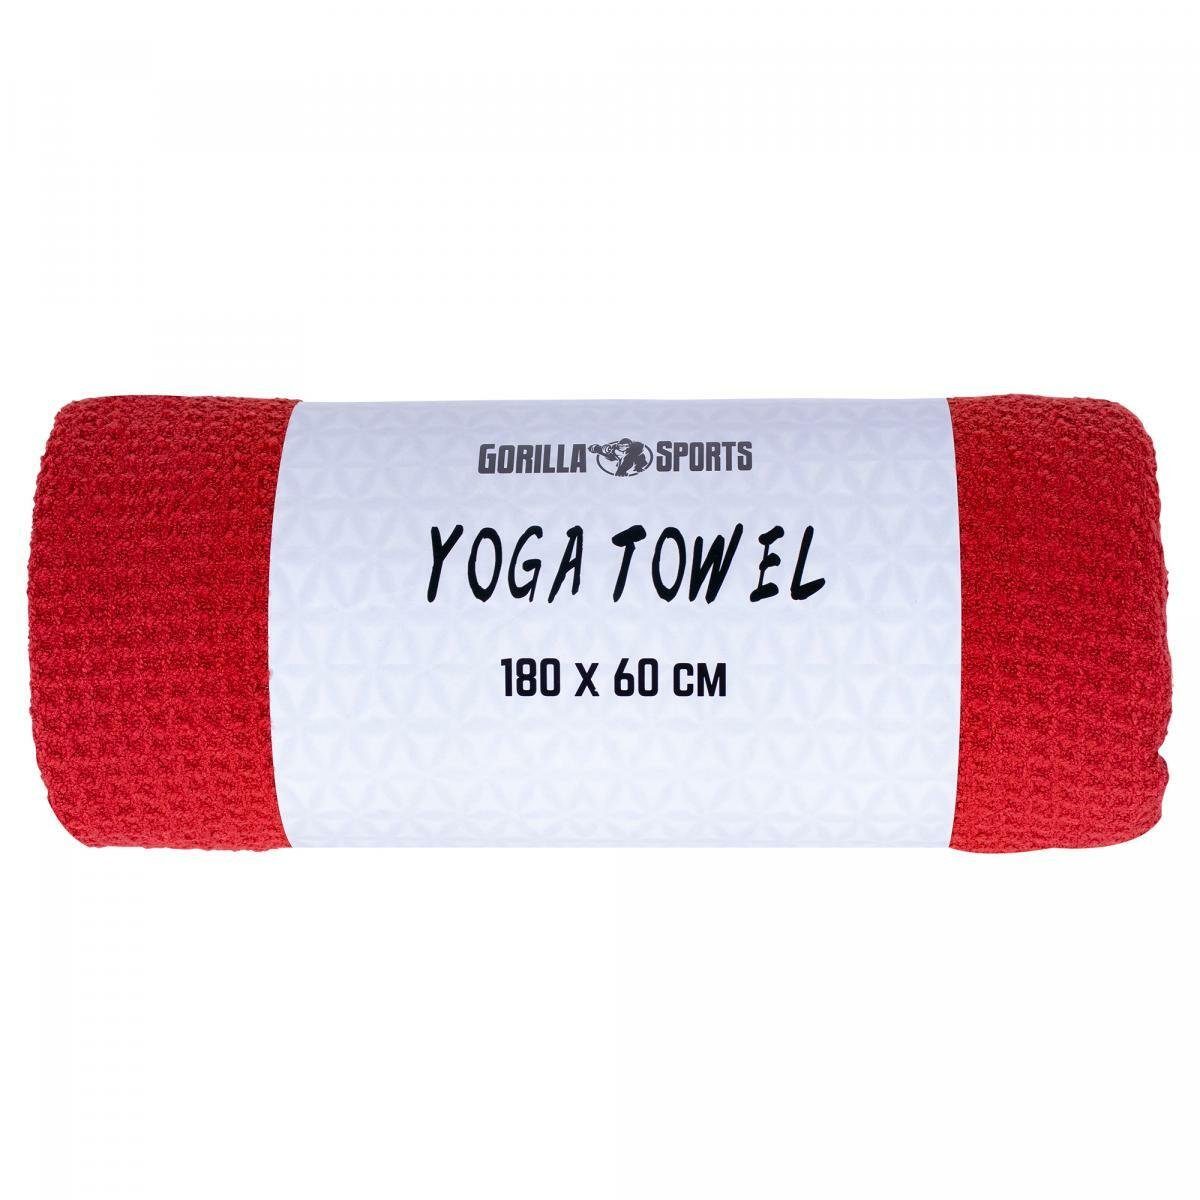 GORILLA SPORTS Sporthandtuch Yoga Handtuch 180x60cm, Towel, Strandtuch, Saugfähig, Schnelltrocknend Dunkelrot | Sporthandtücher